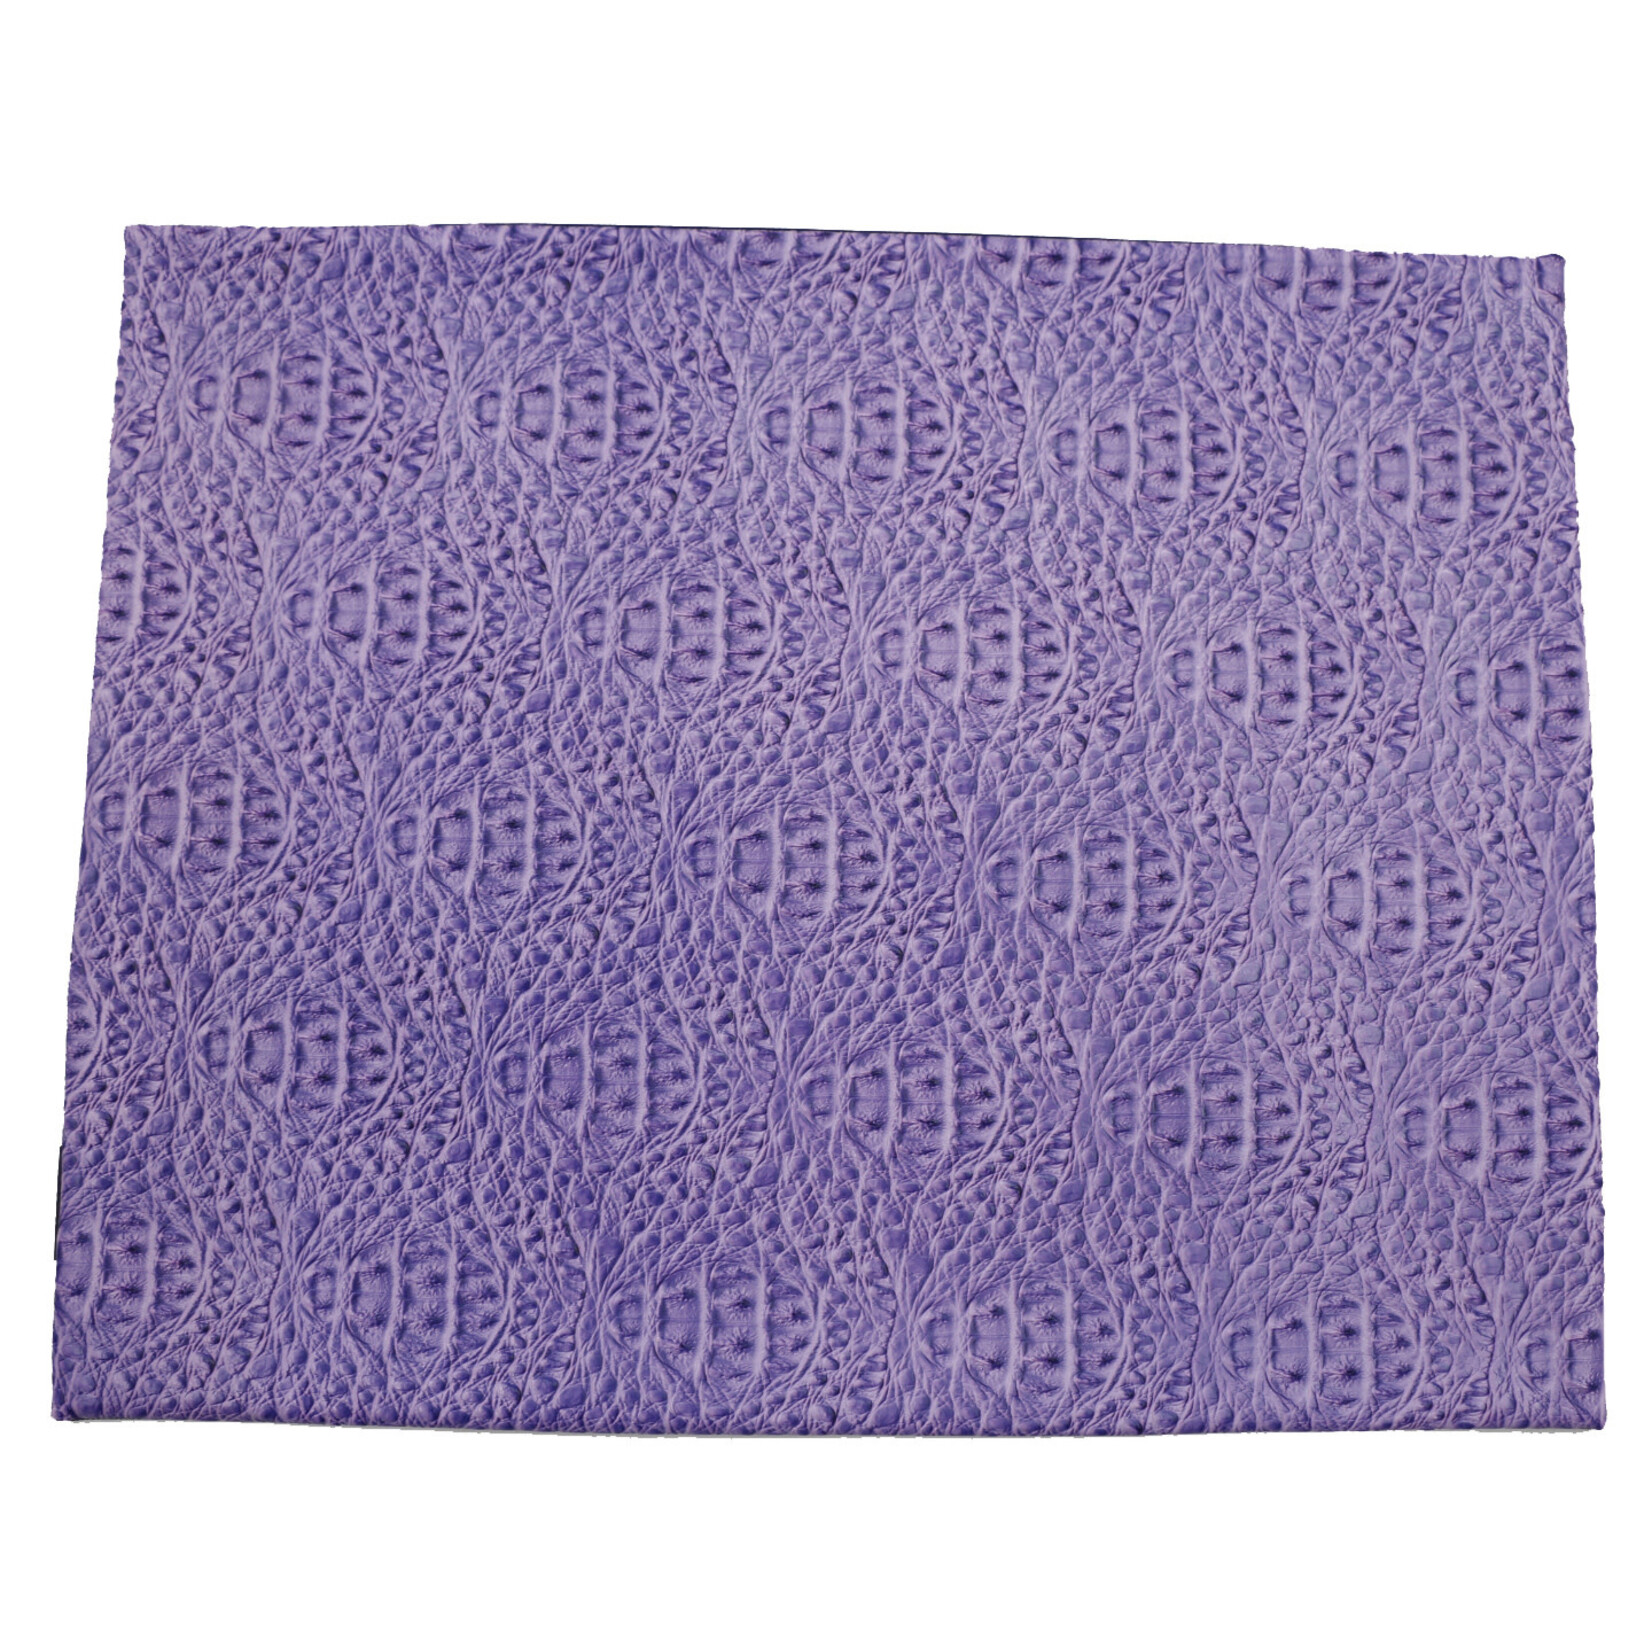 Leatherette Alligator Skin-Effect Challah Cover, Purple